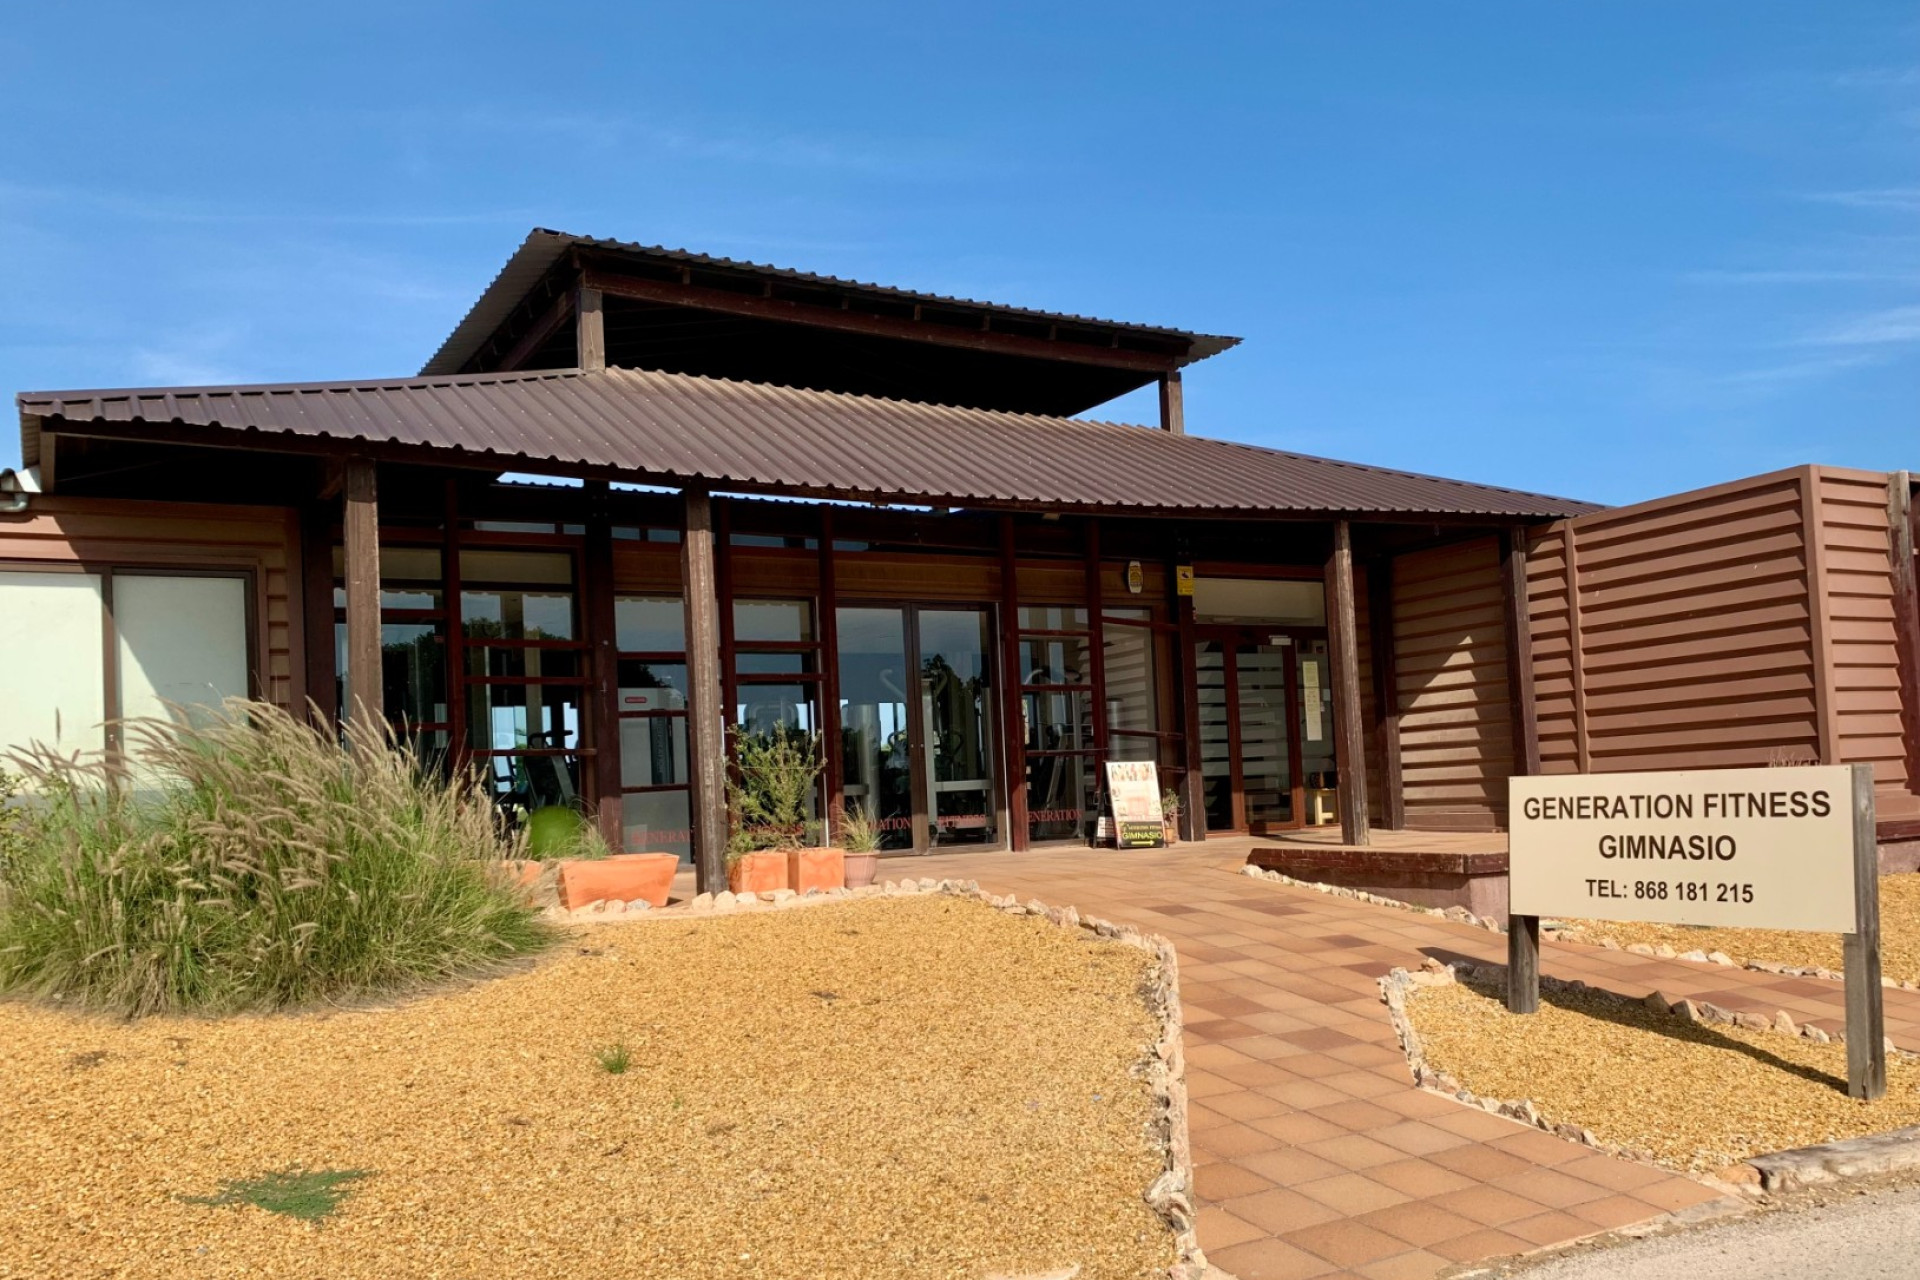 Nouvelle construction - Villa de golf individuelle - Roda Golf & Beach Resort, San Javier - Costa Calida